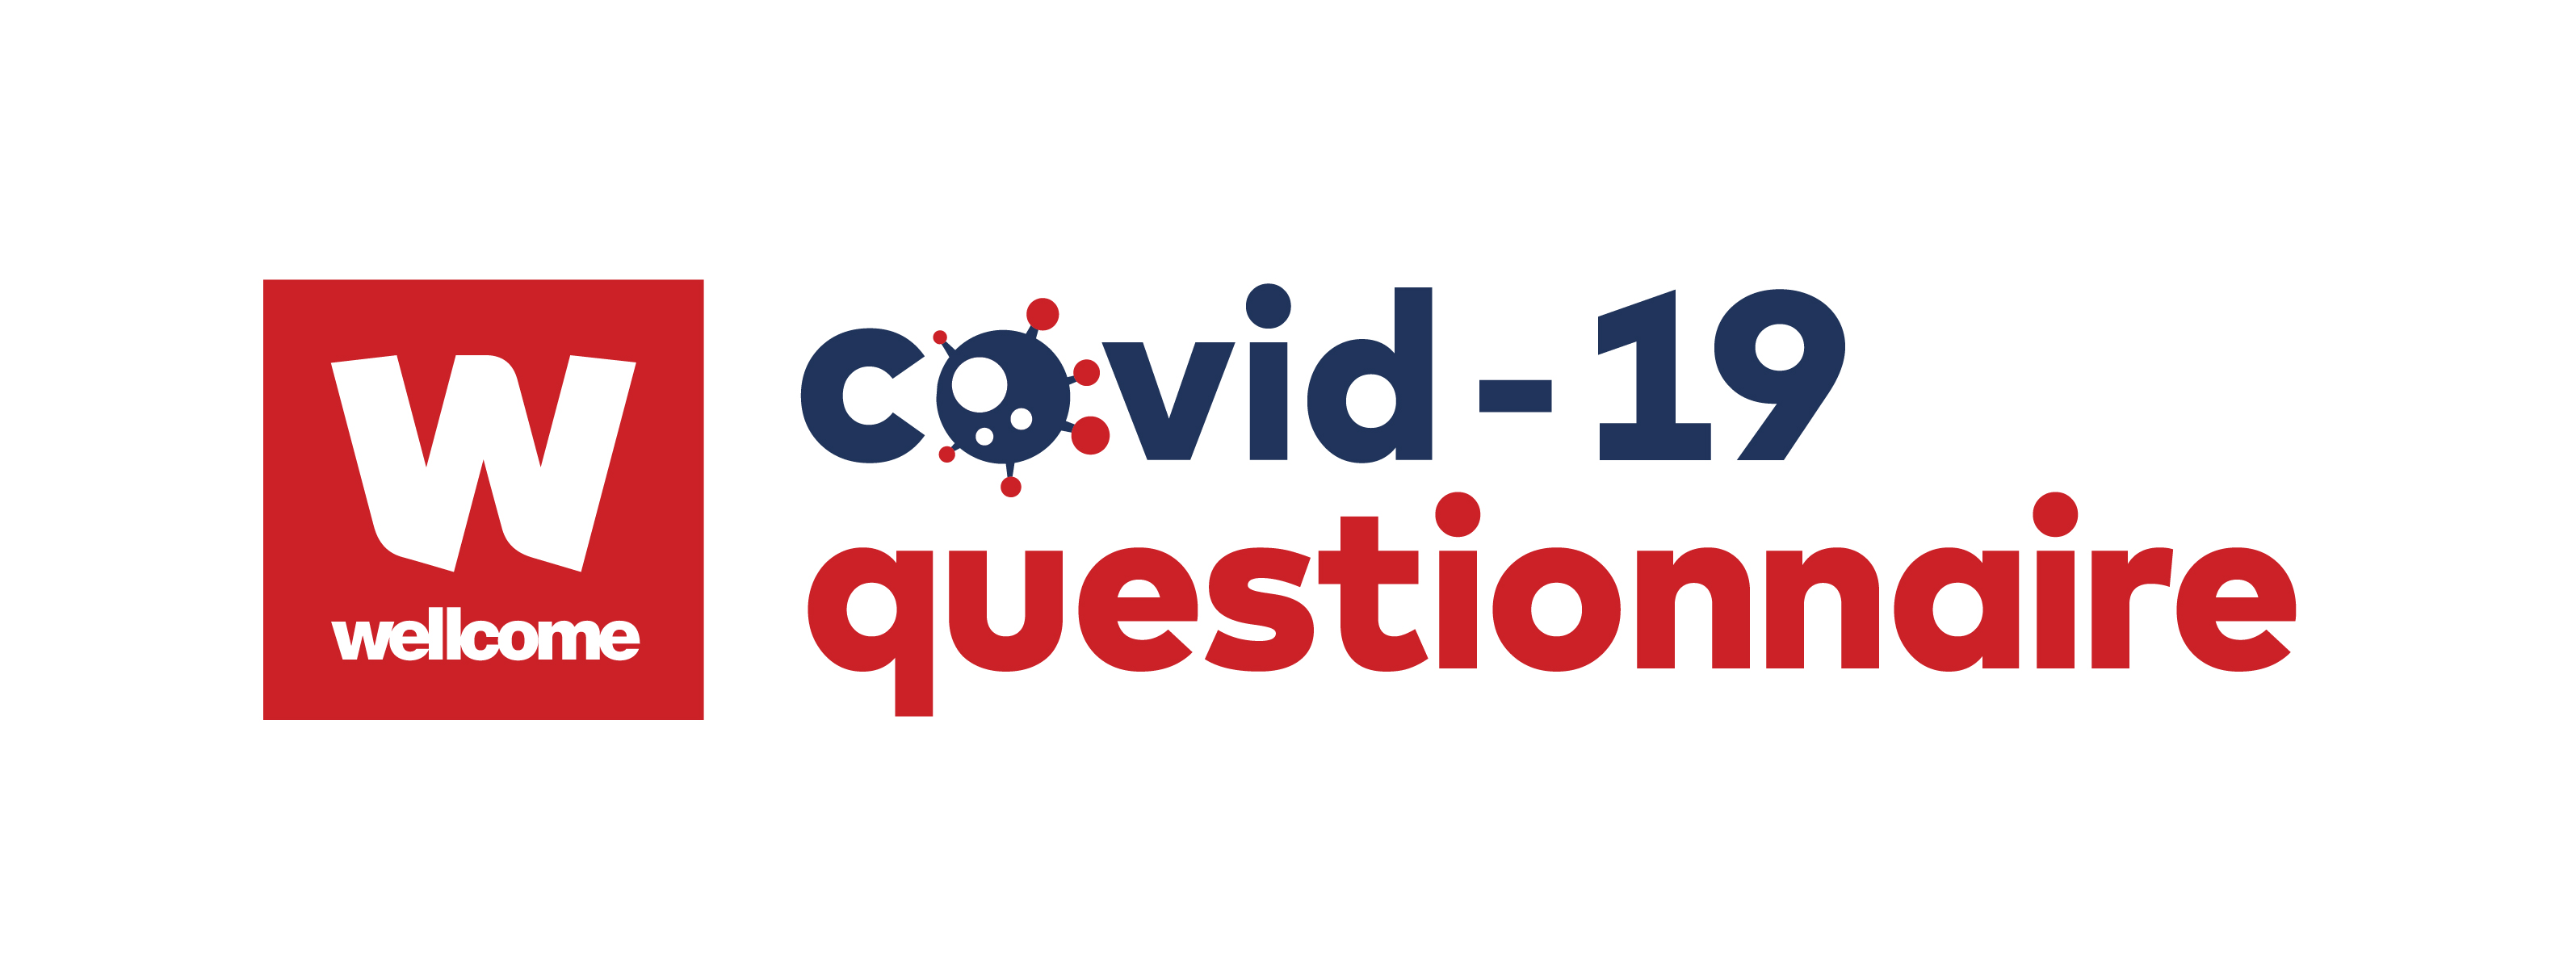 Wellcome Covid 19 Questionnaire Avon Longitudinal Study of Parents